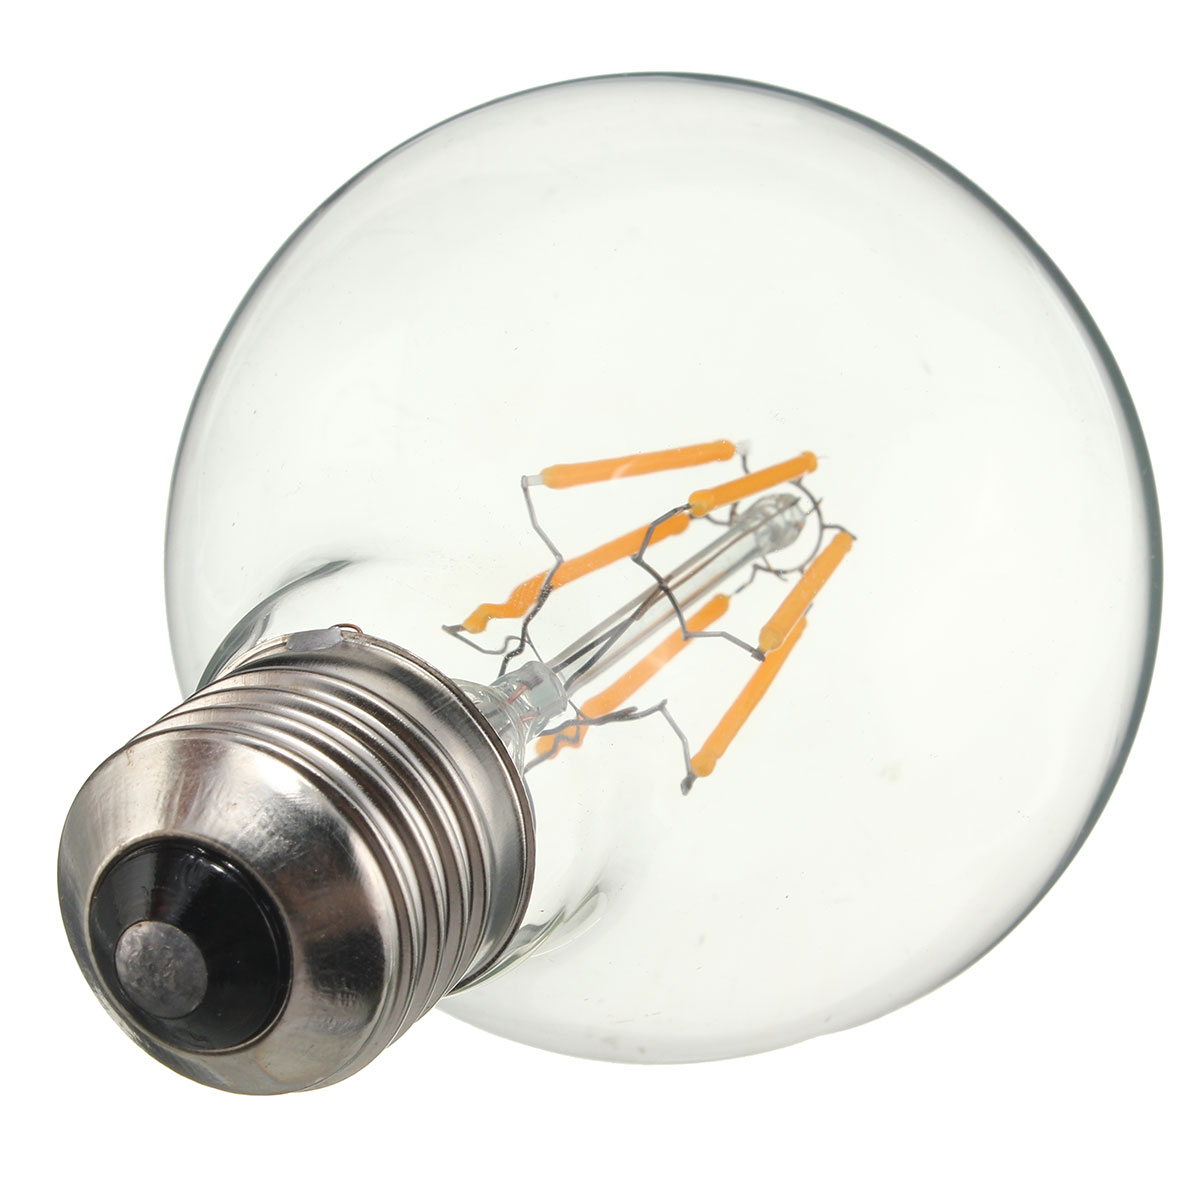 Dimmable-G80-E27-6W-COB-Warm-White-600Lumens-Retro-Vintage-Light-Lamp-Bulb-AC110V-AC220V-1074483